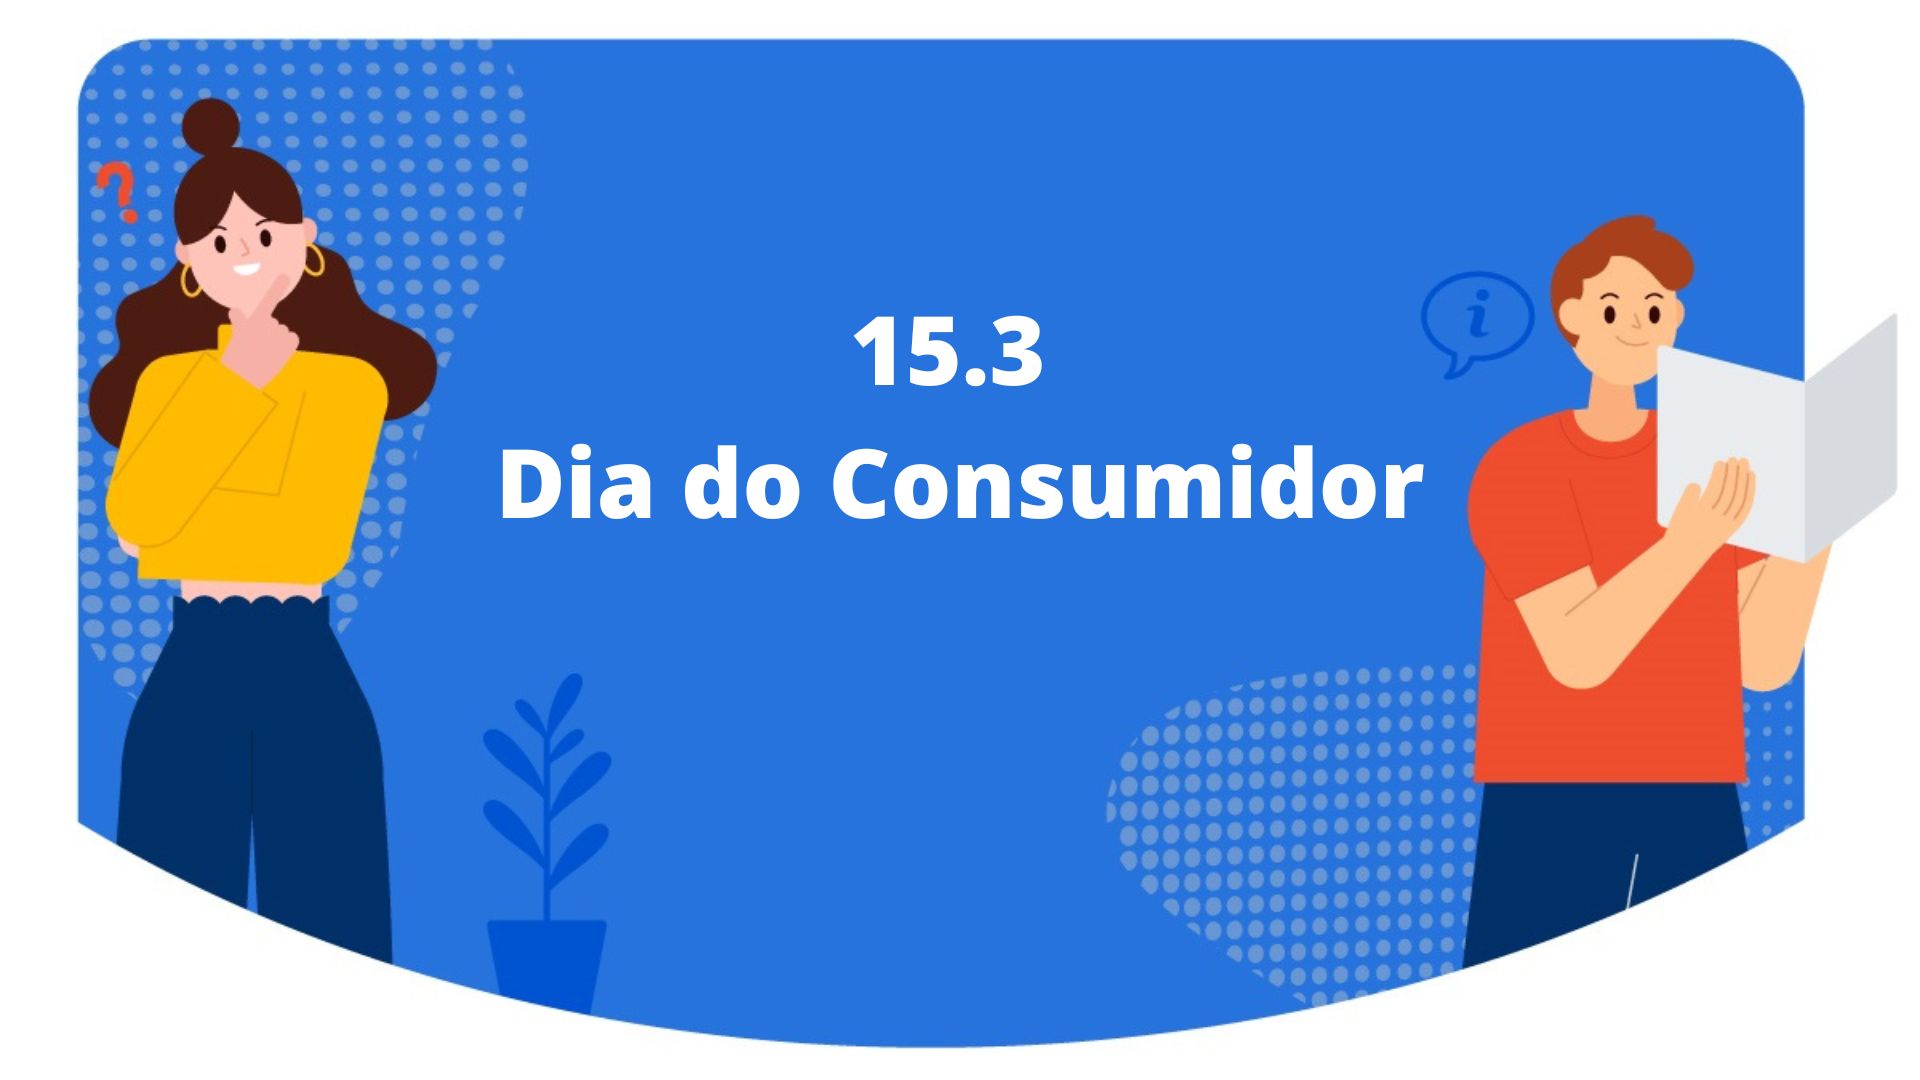 15.3 Dia do Consumidor